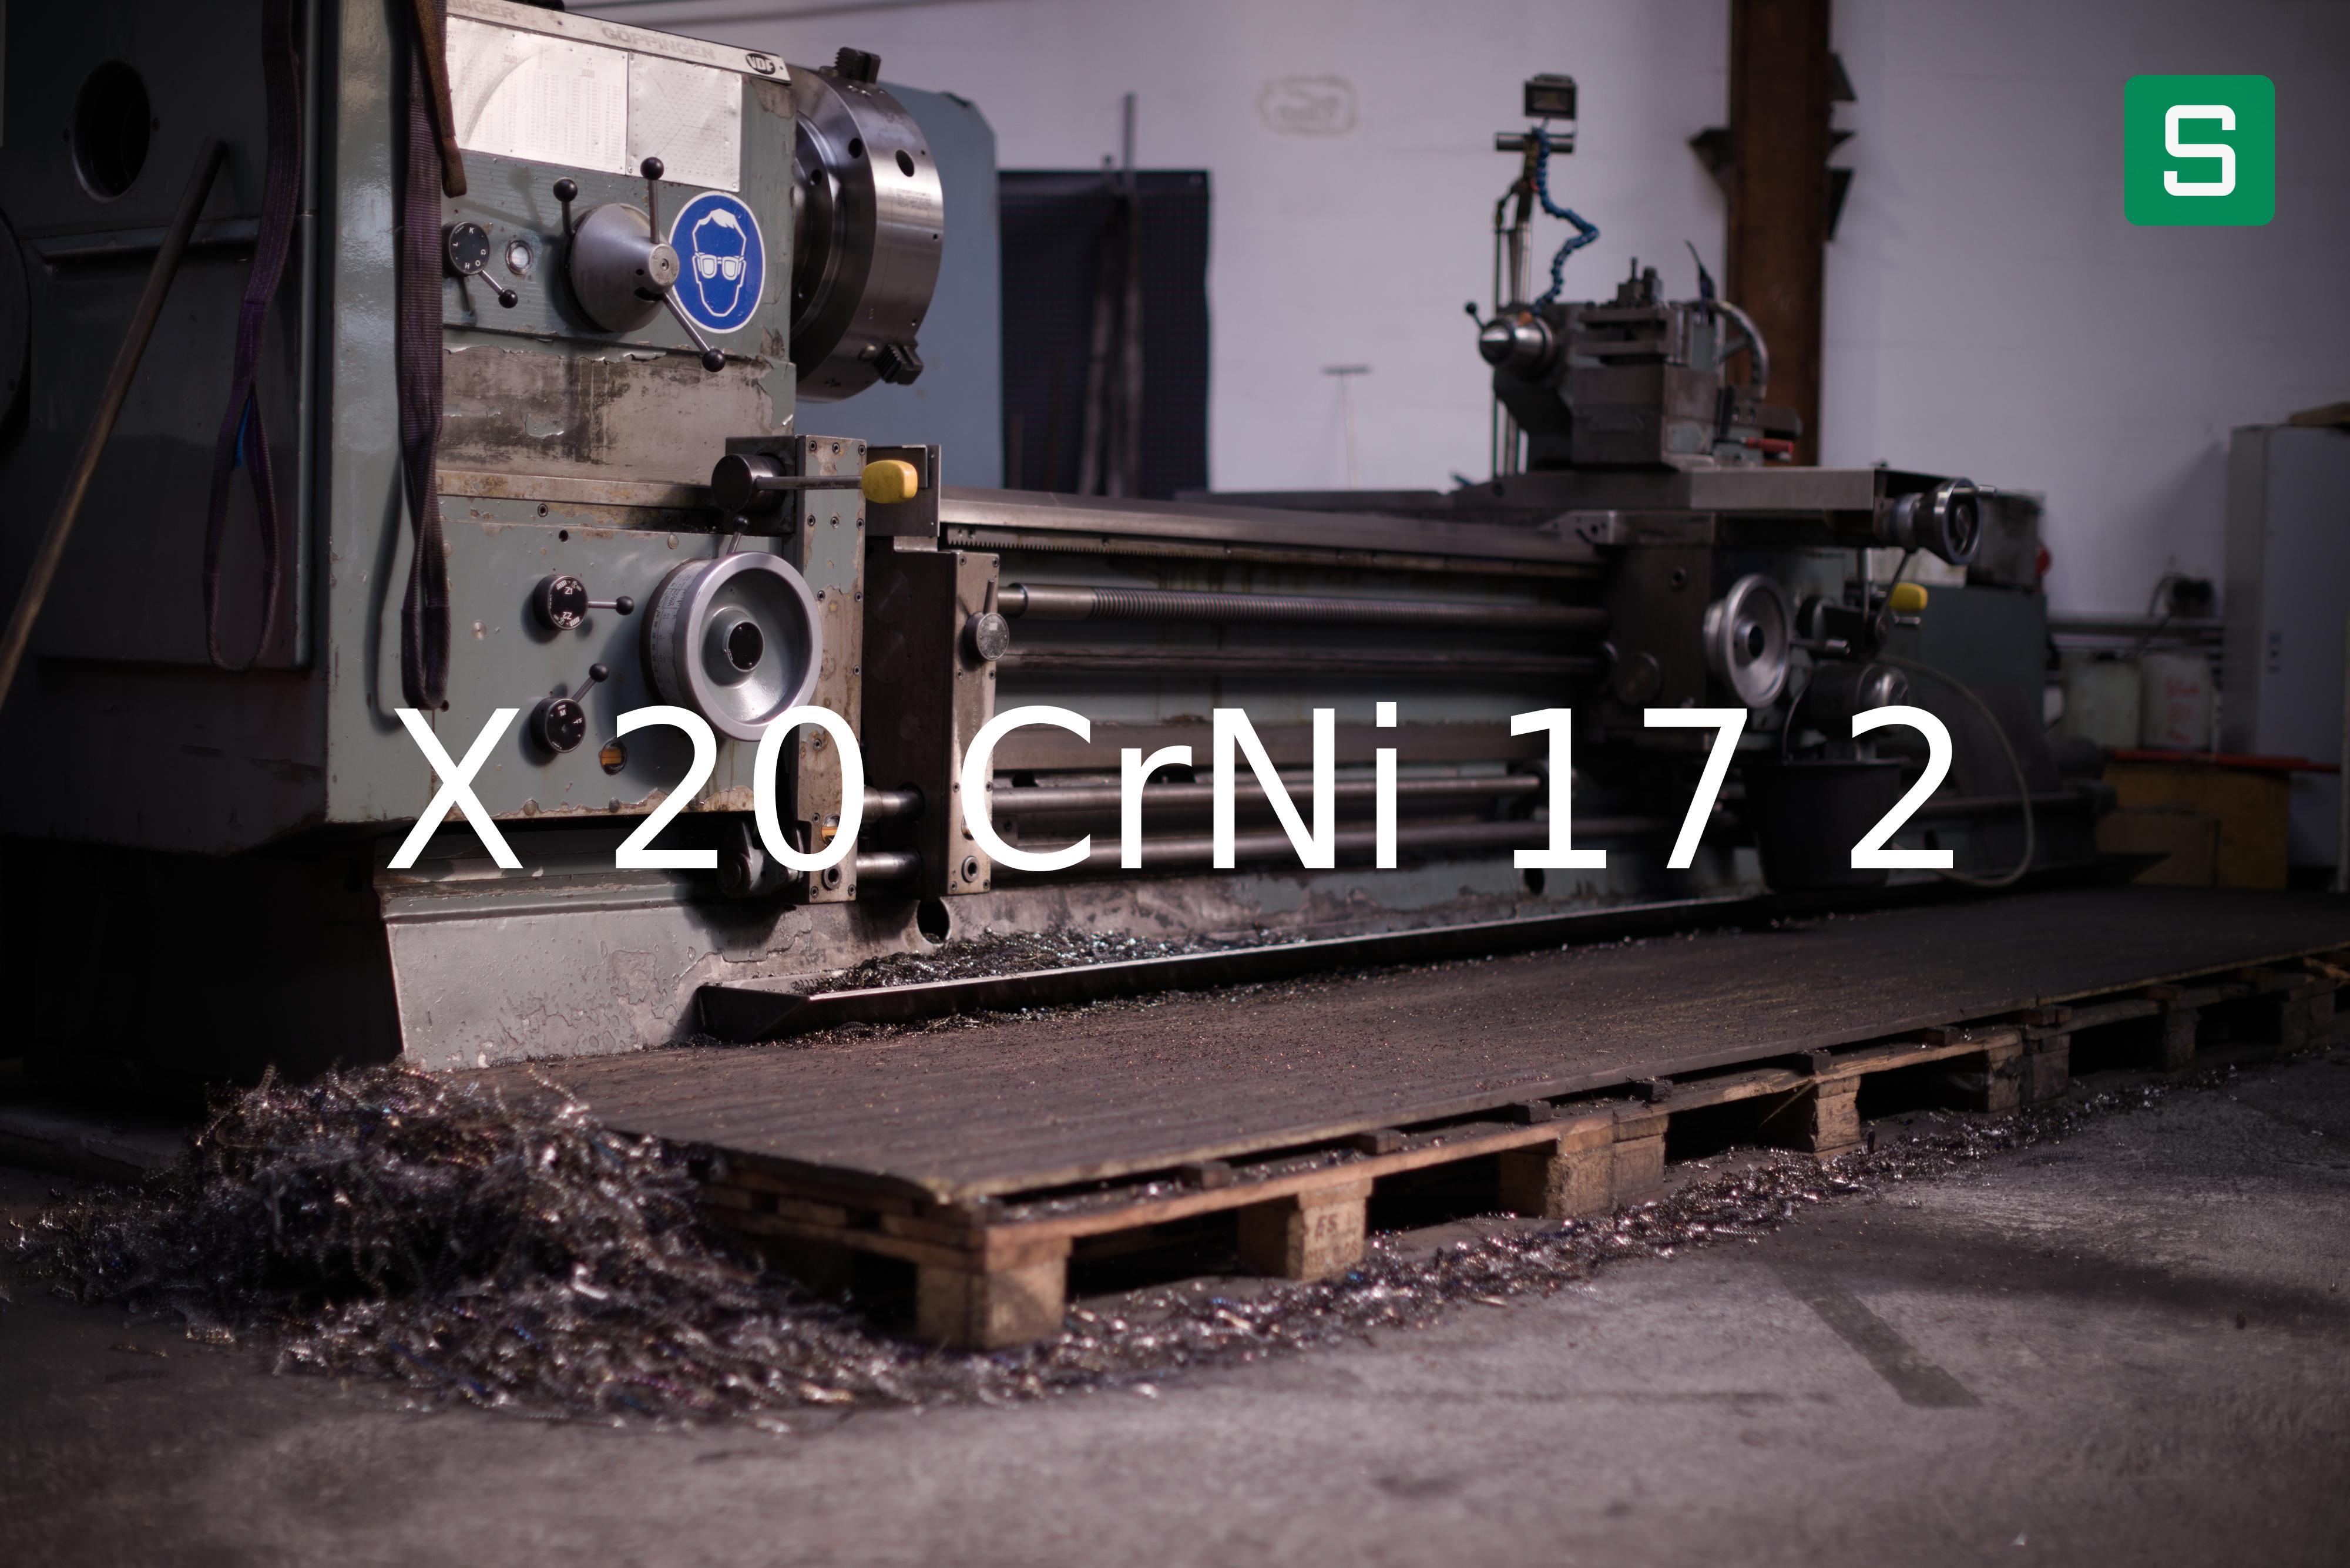 Steel Material: X 20 CrNi 17 2